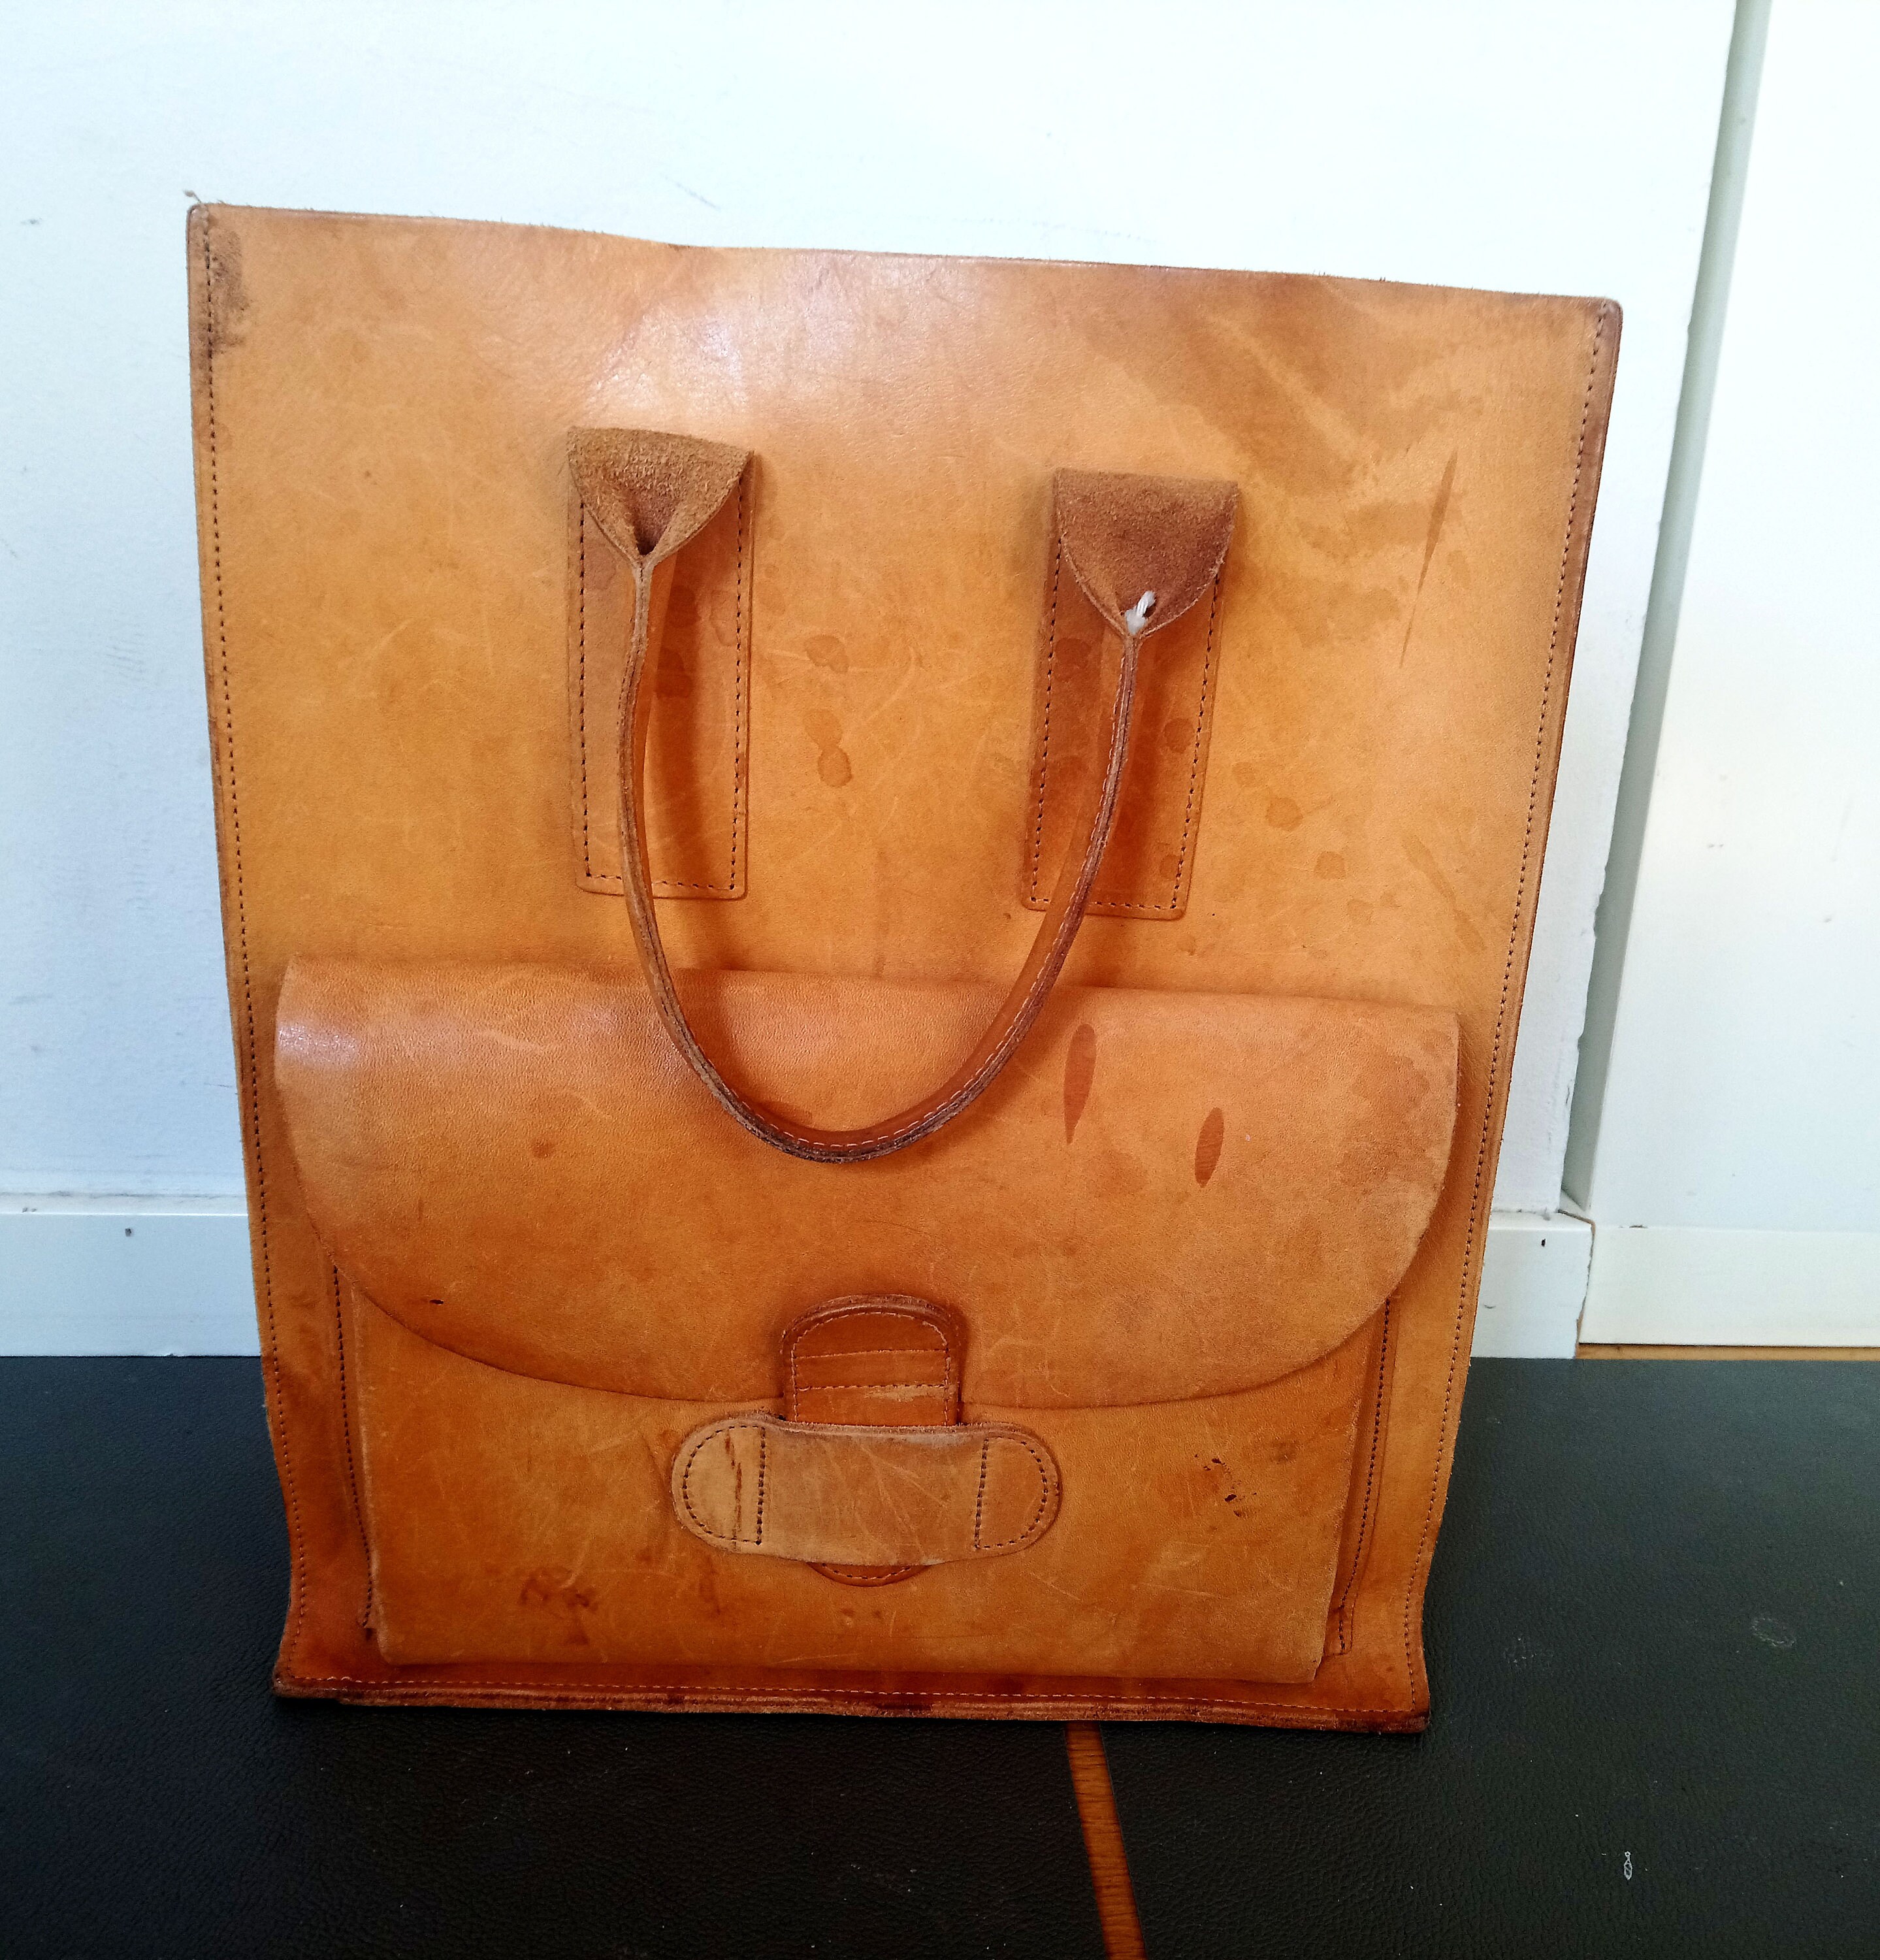 small patina on the flap of the bag Handbag 396078, HealthdesignShops